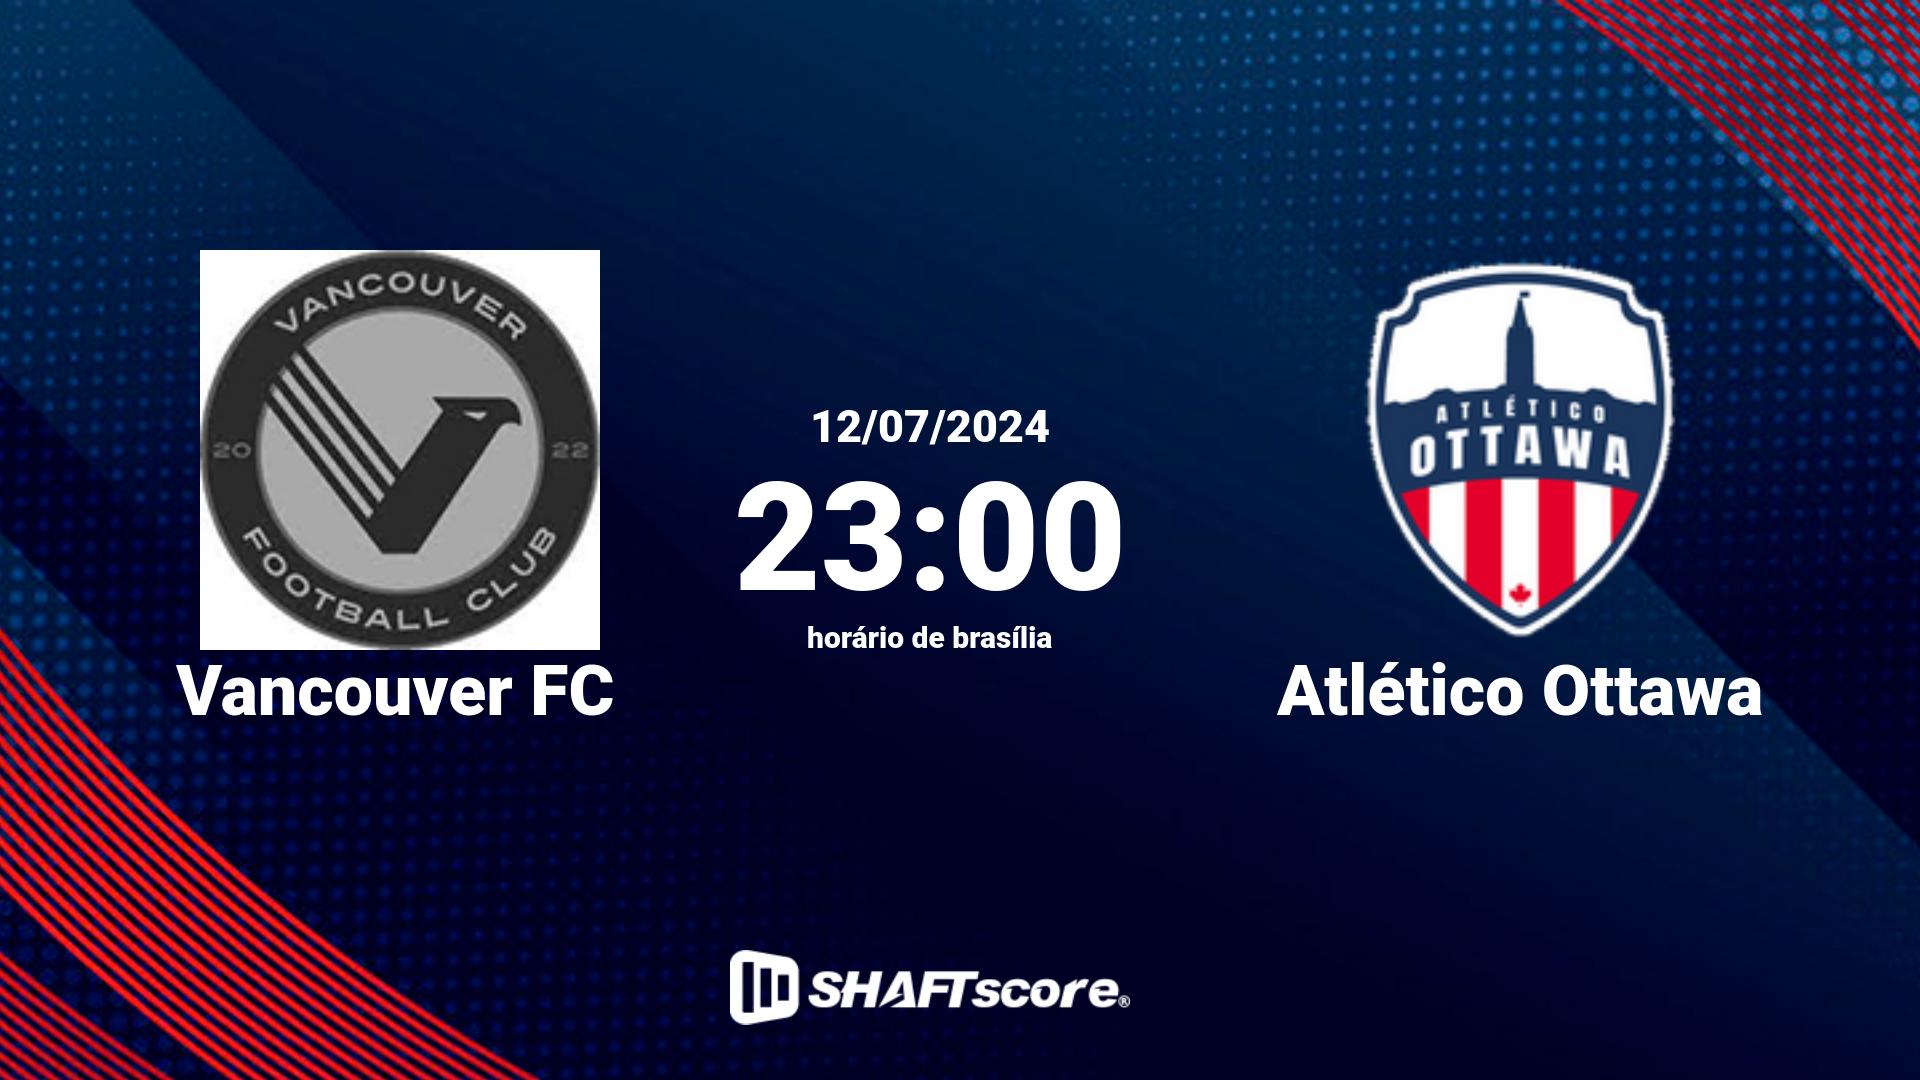 Estatísticas do jogo Vancouver FC vs Atlético Ottawa 12.07 23:00